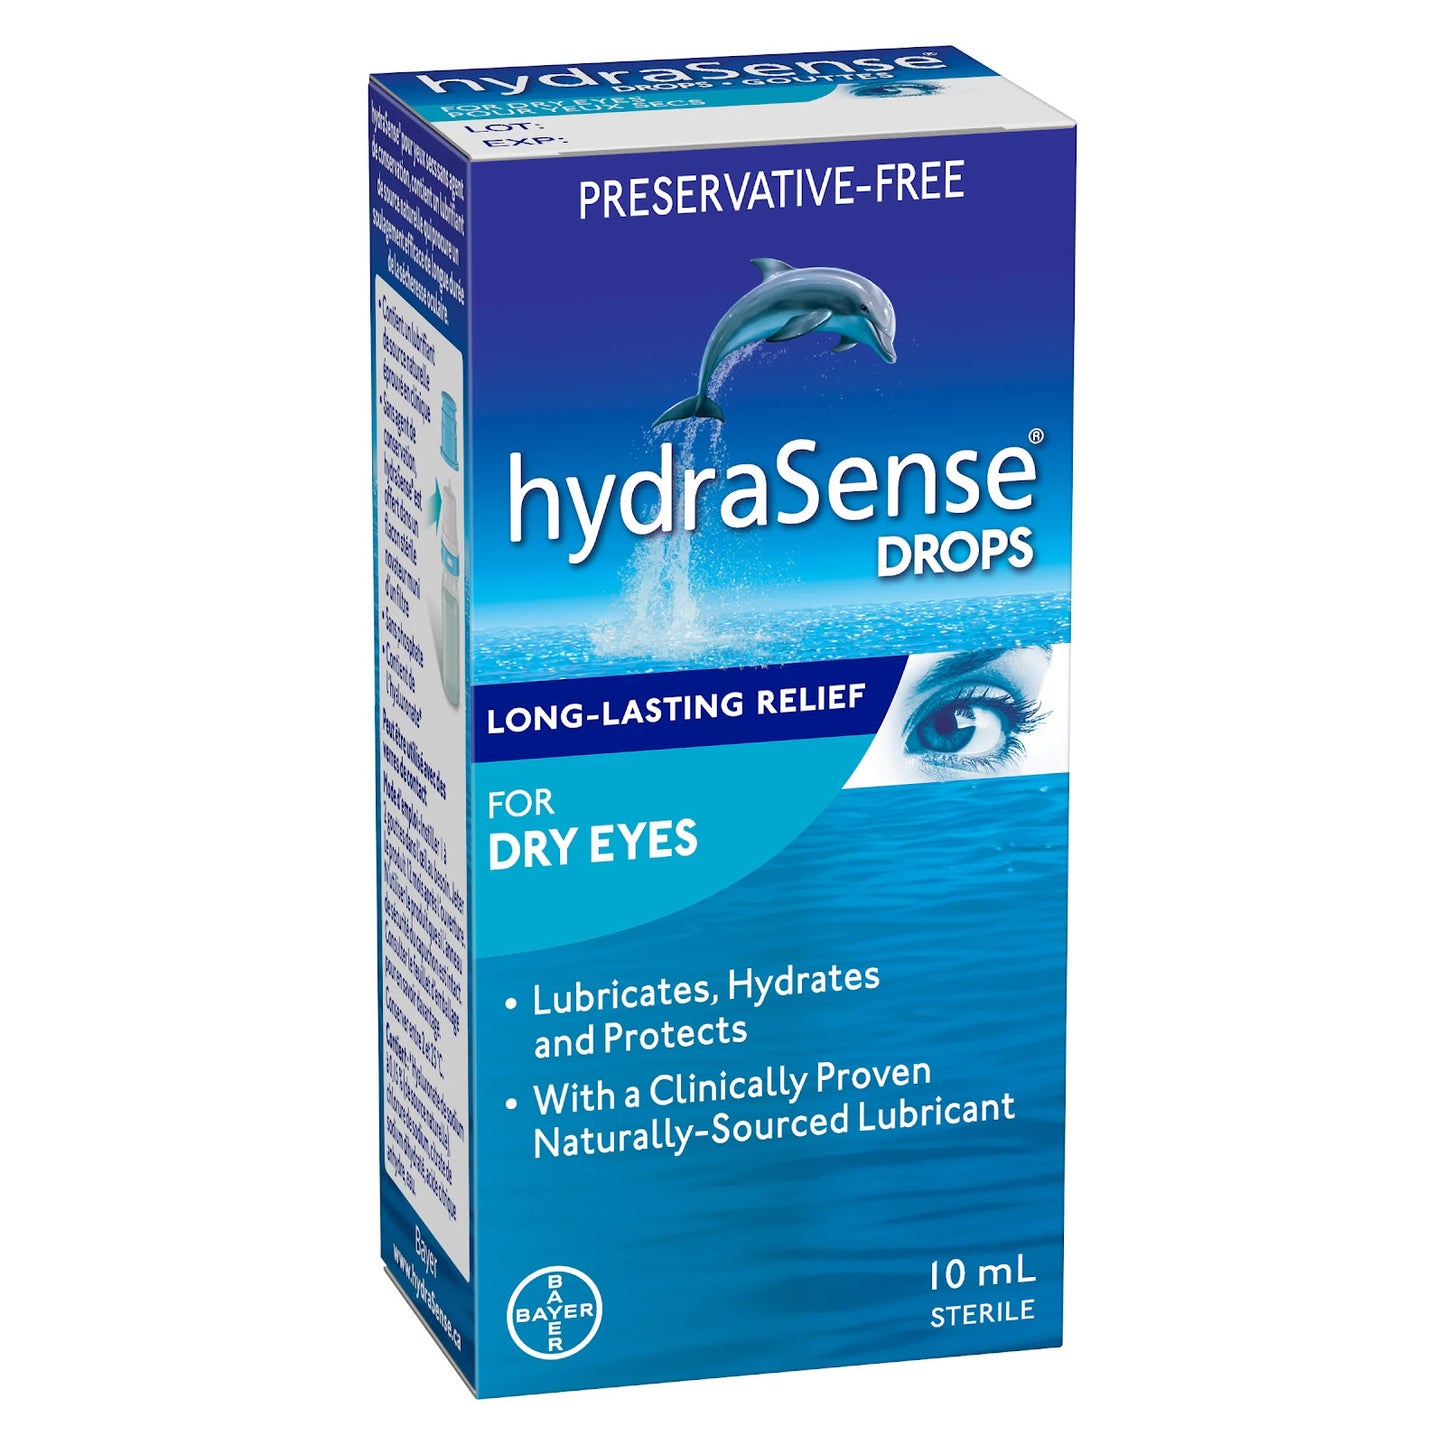 HydraSense Dry Eye Drops